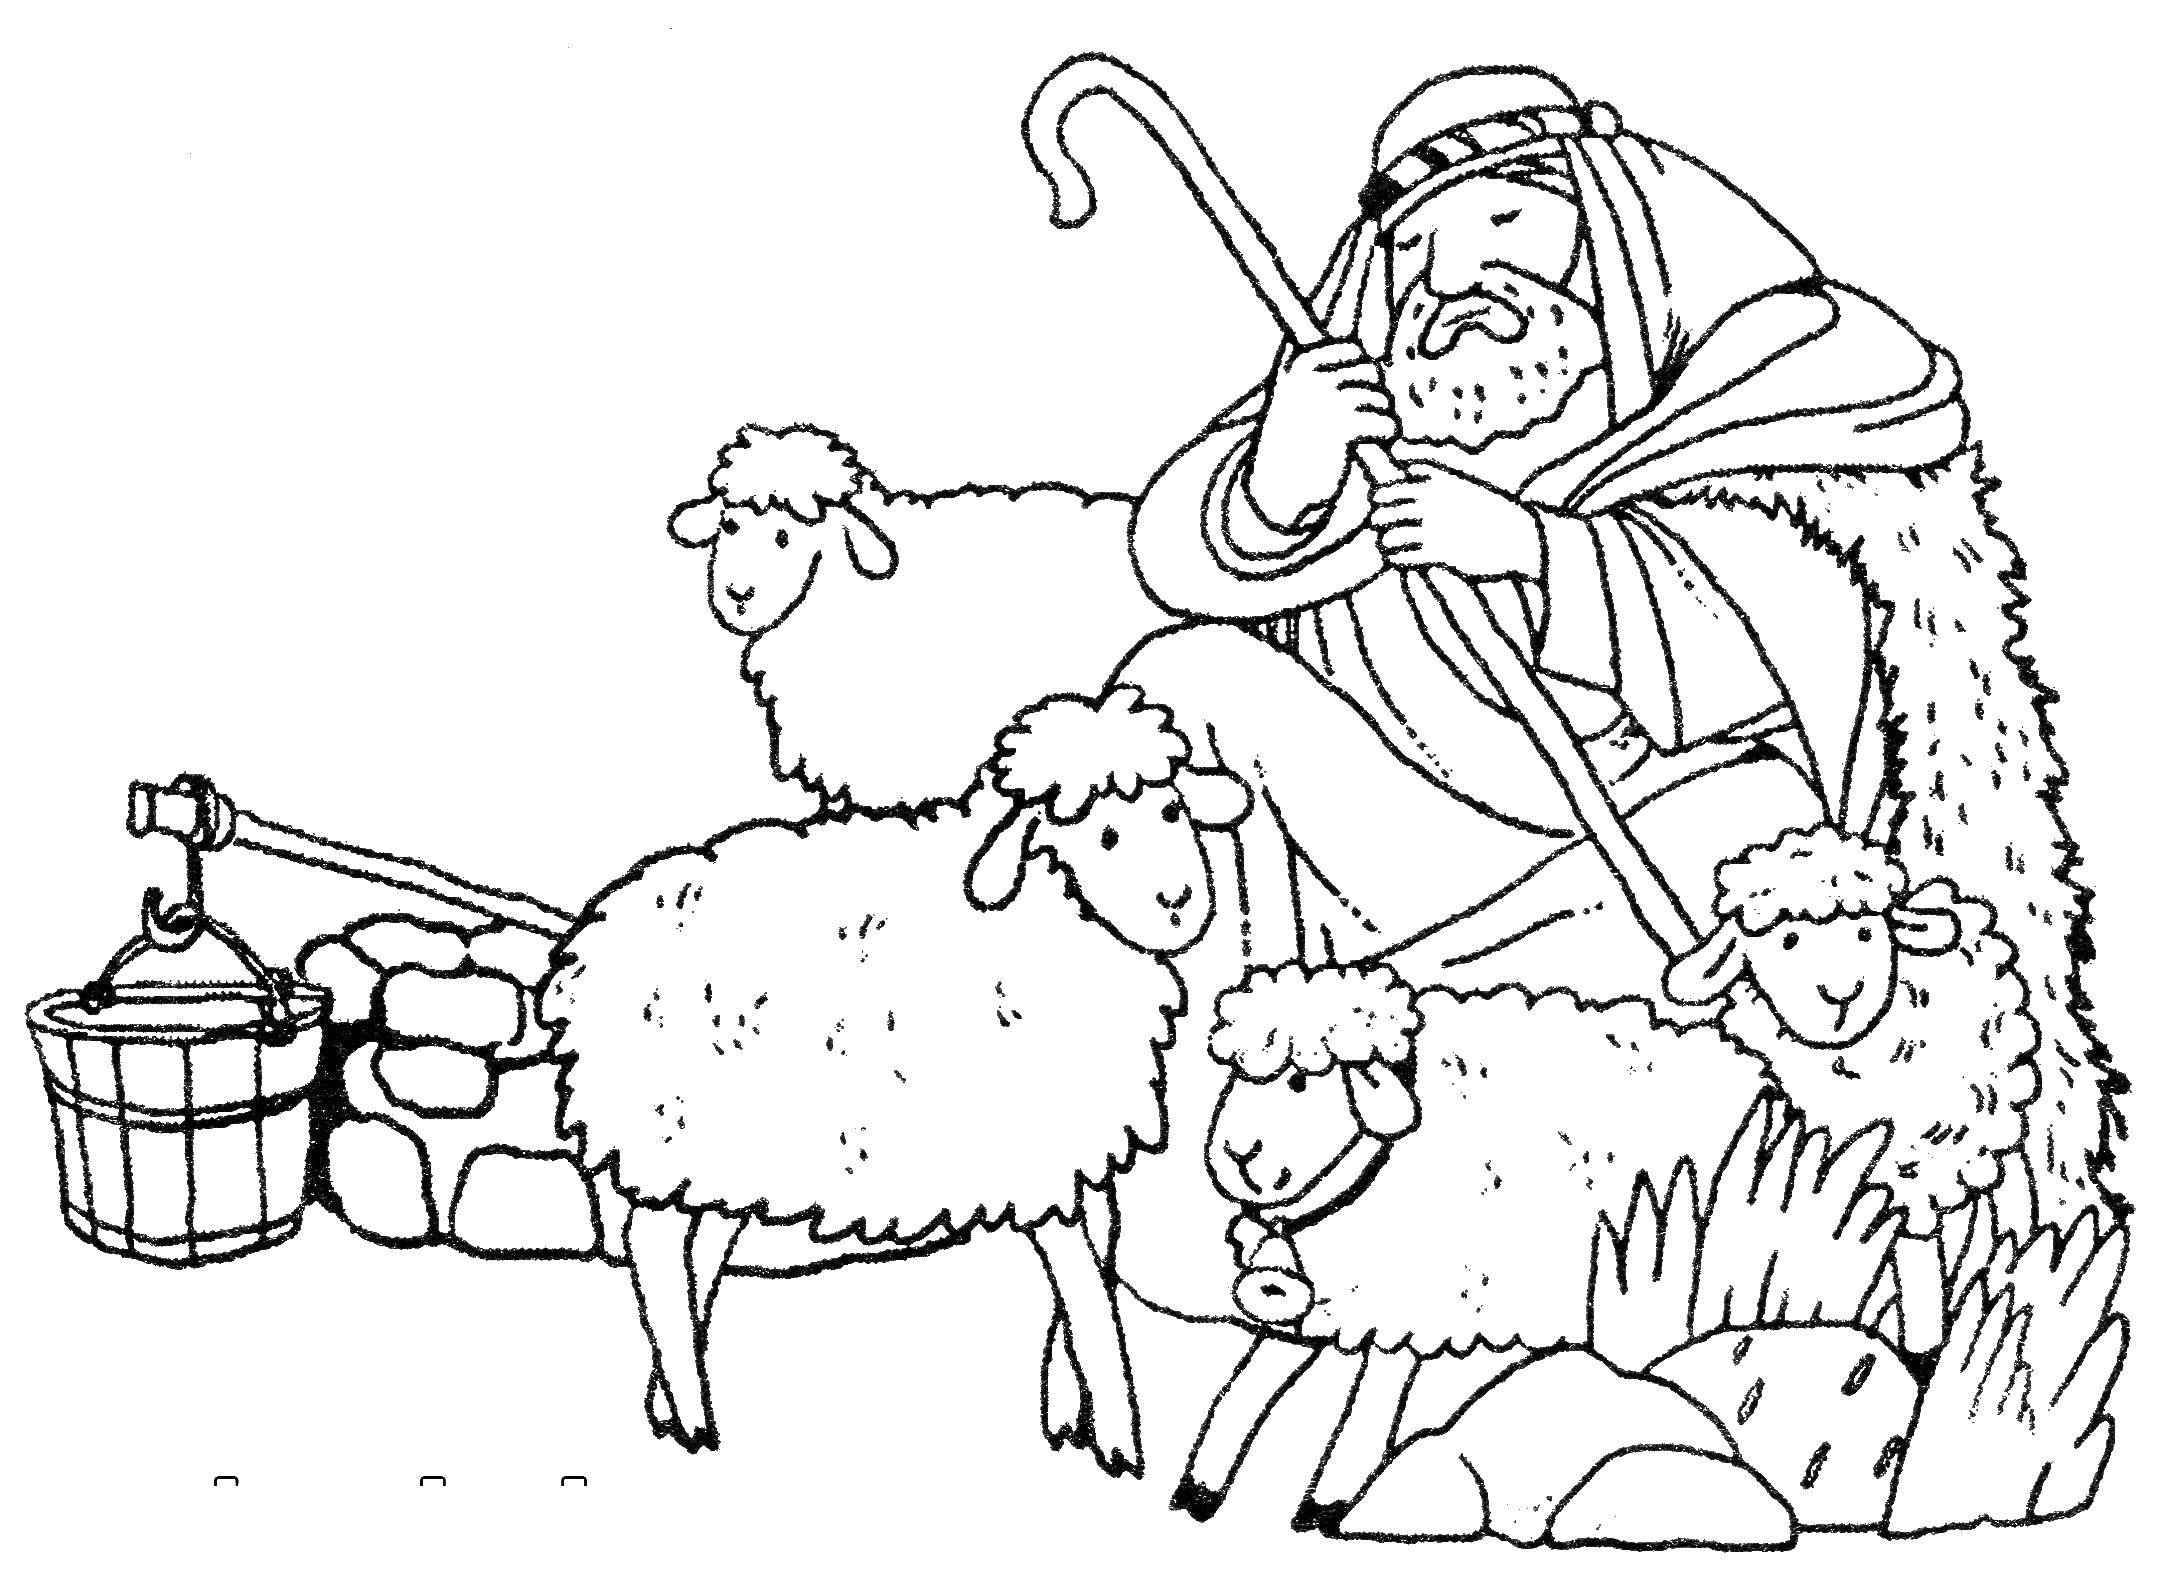 Coloring Pastuch and sheep. Category People. Tags:  Pastuh, sheep.